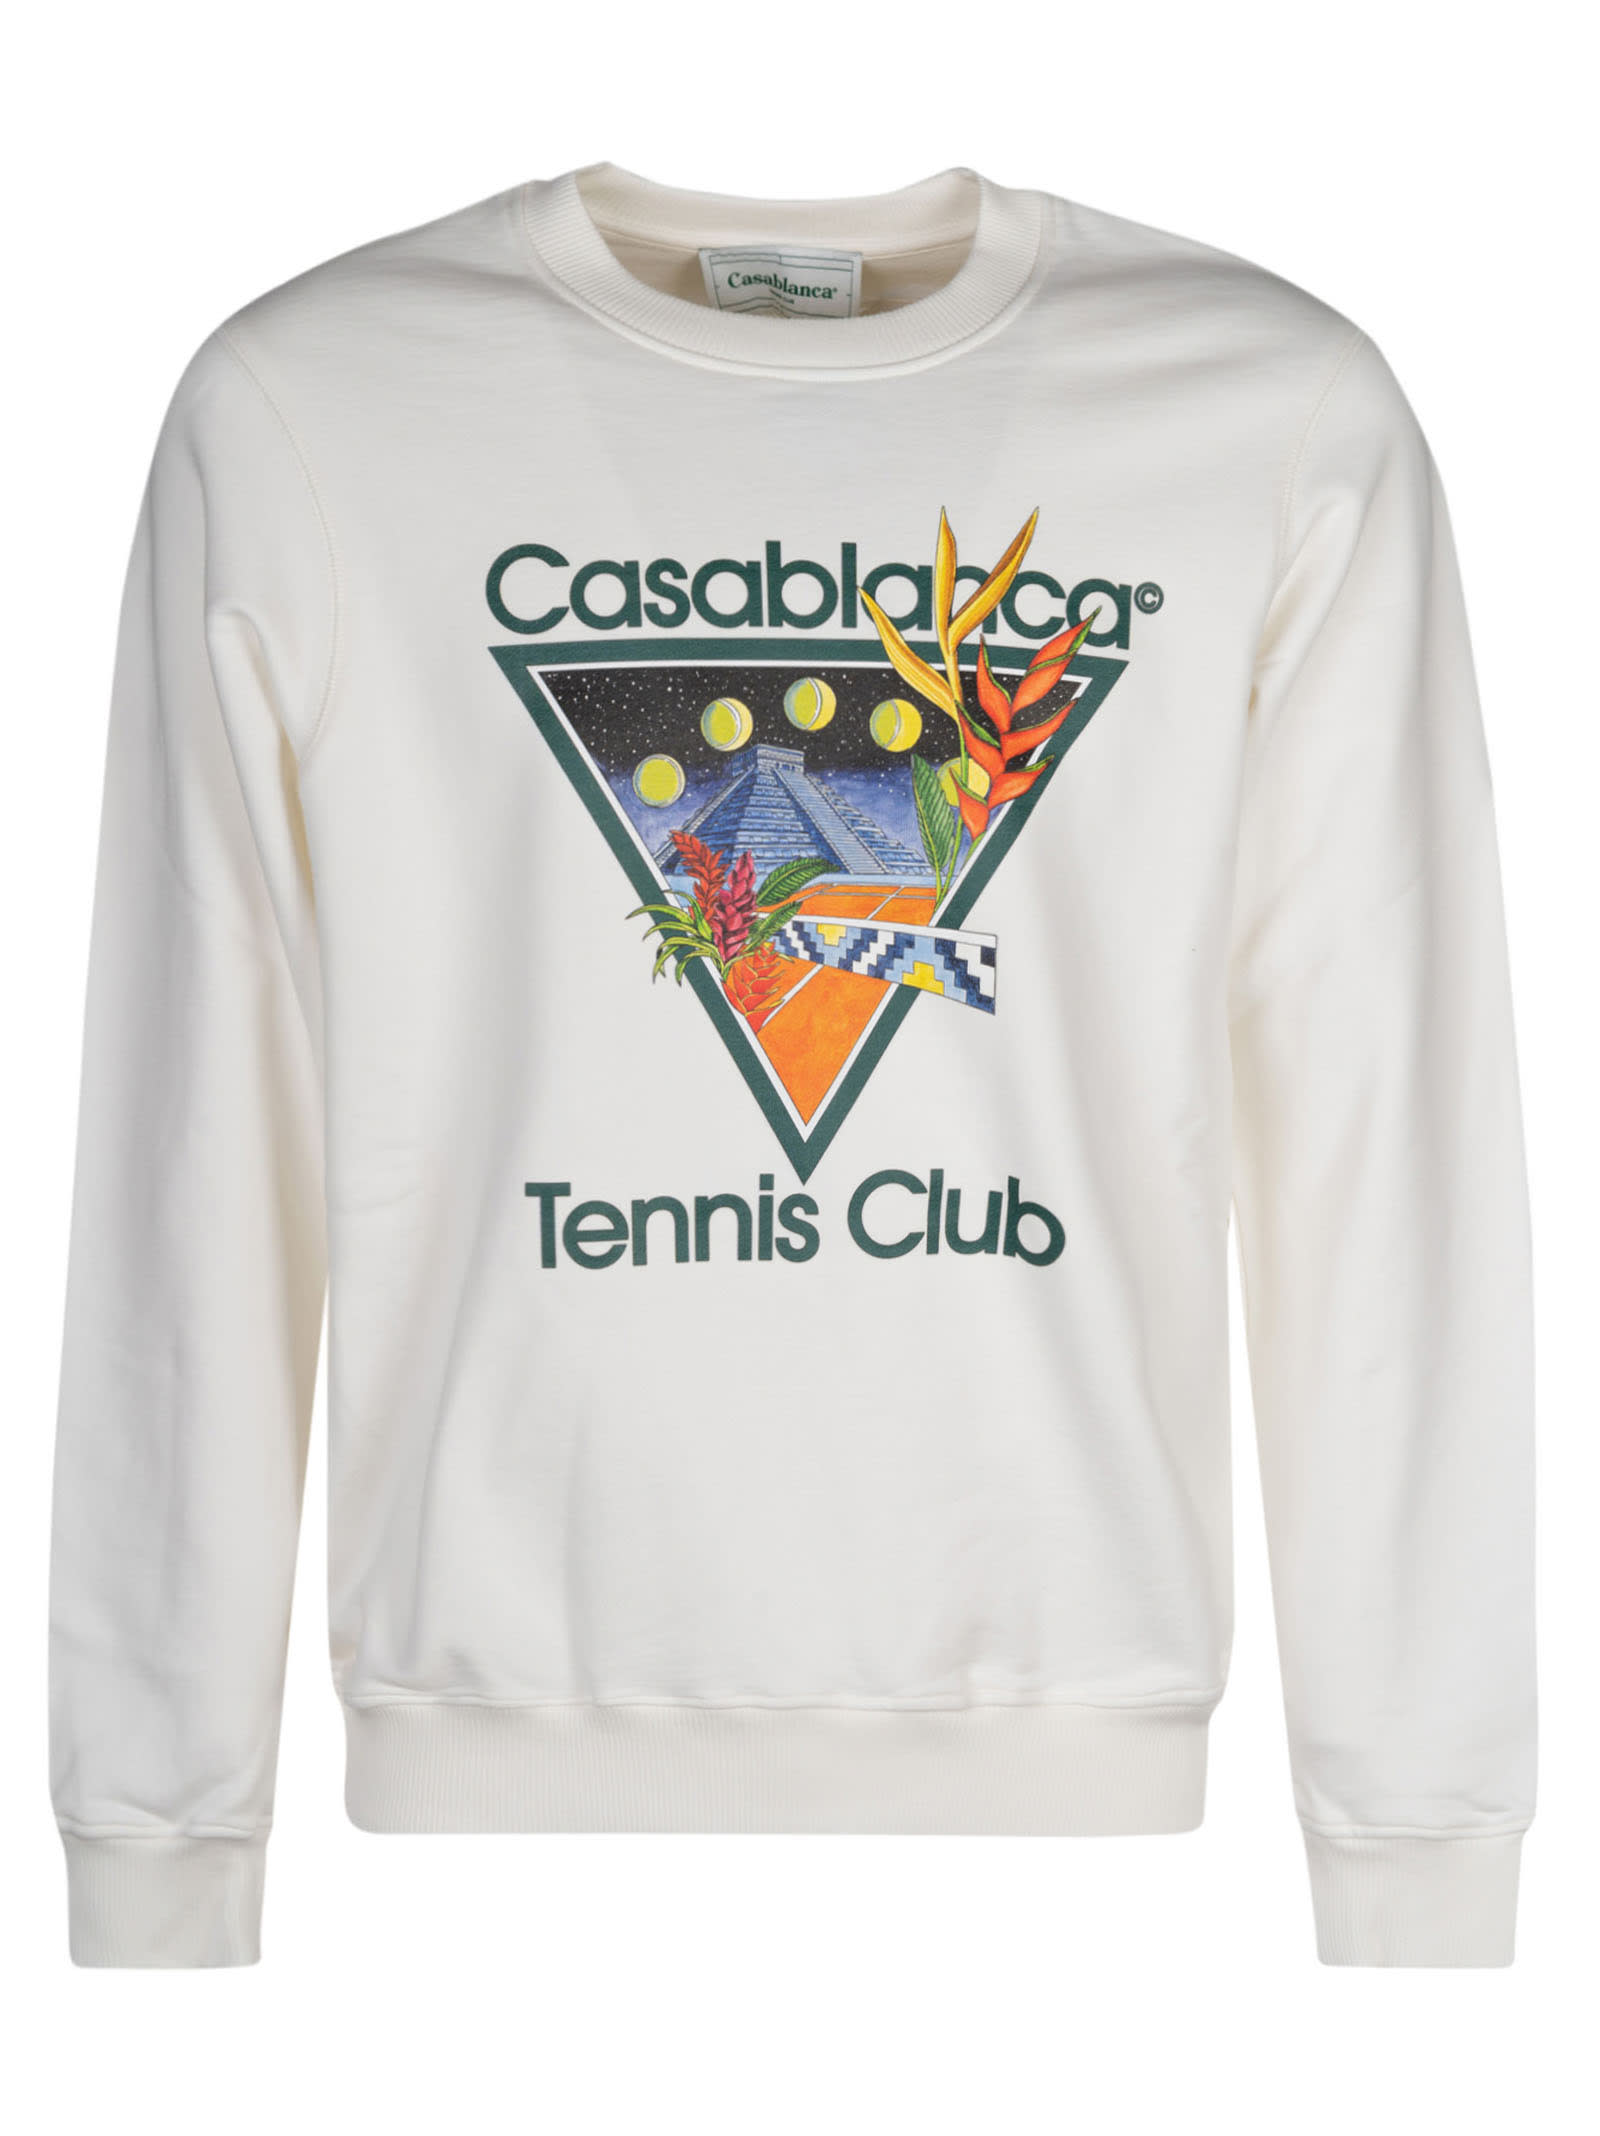 CASABLANCA TENNIS CLUB SWEATSHIRT